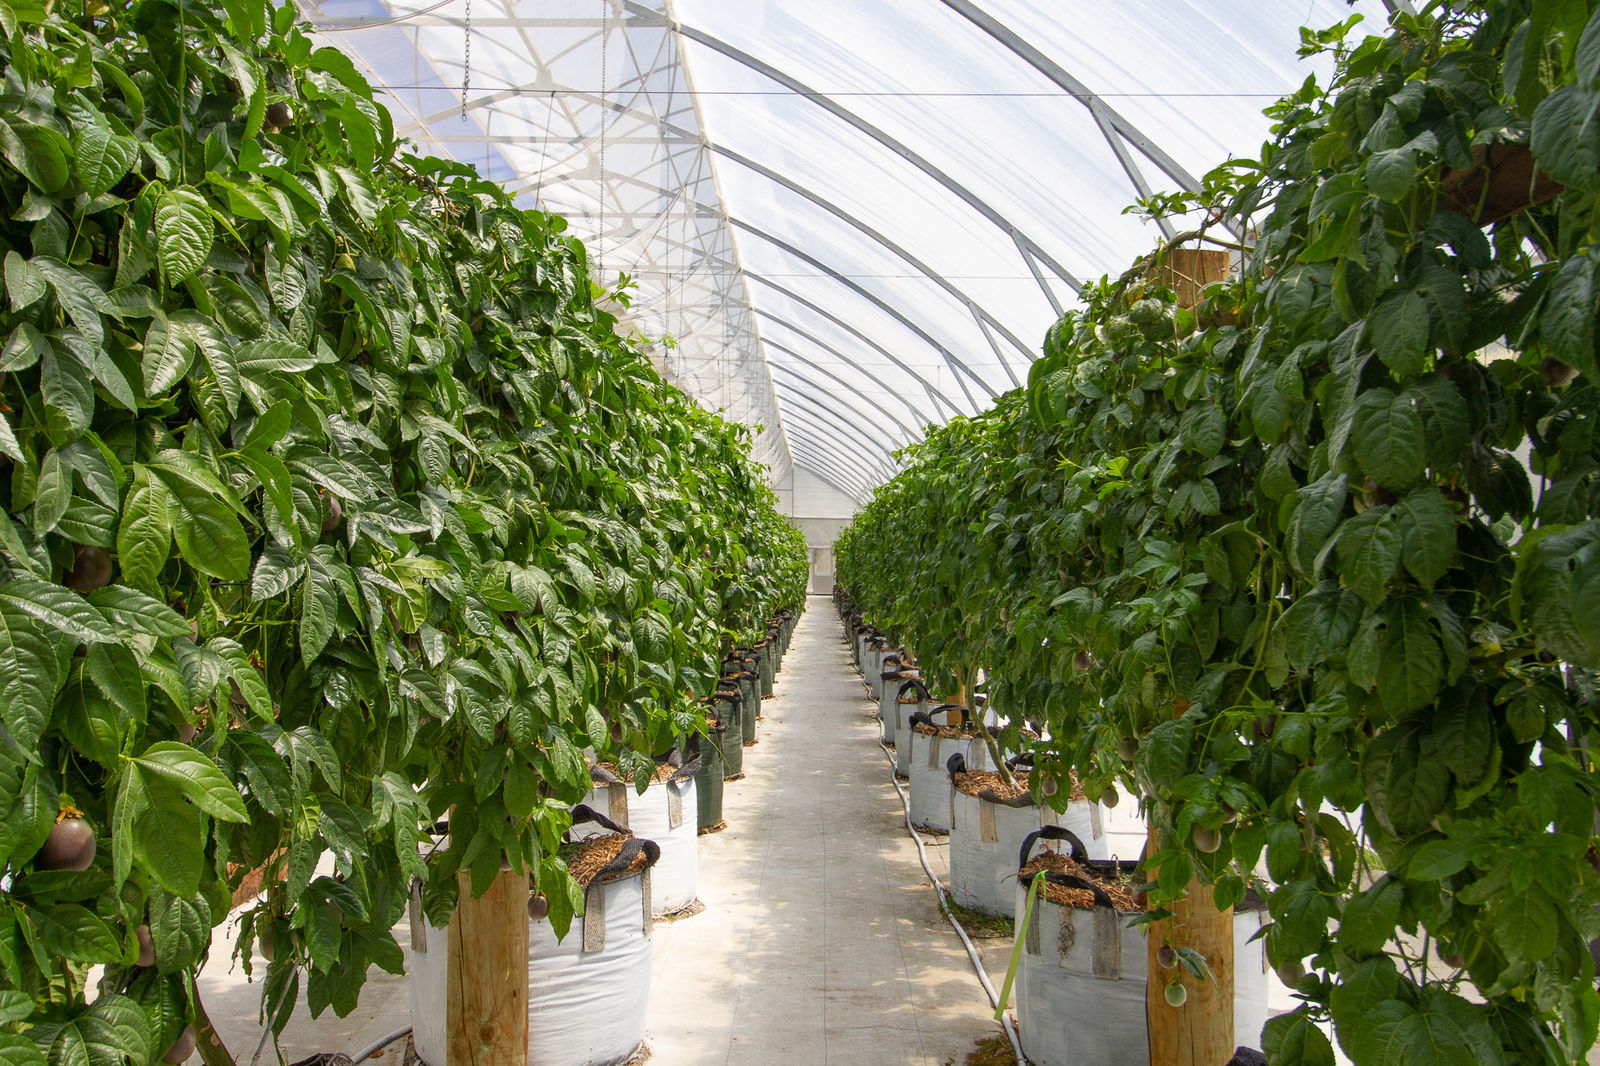 Passionfruit plants growing inside a CEA greenhouse